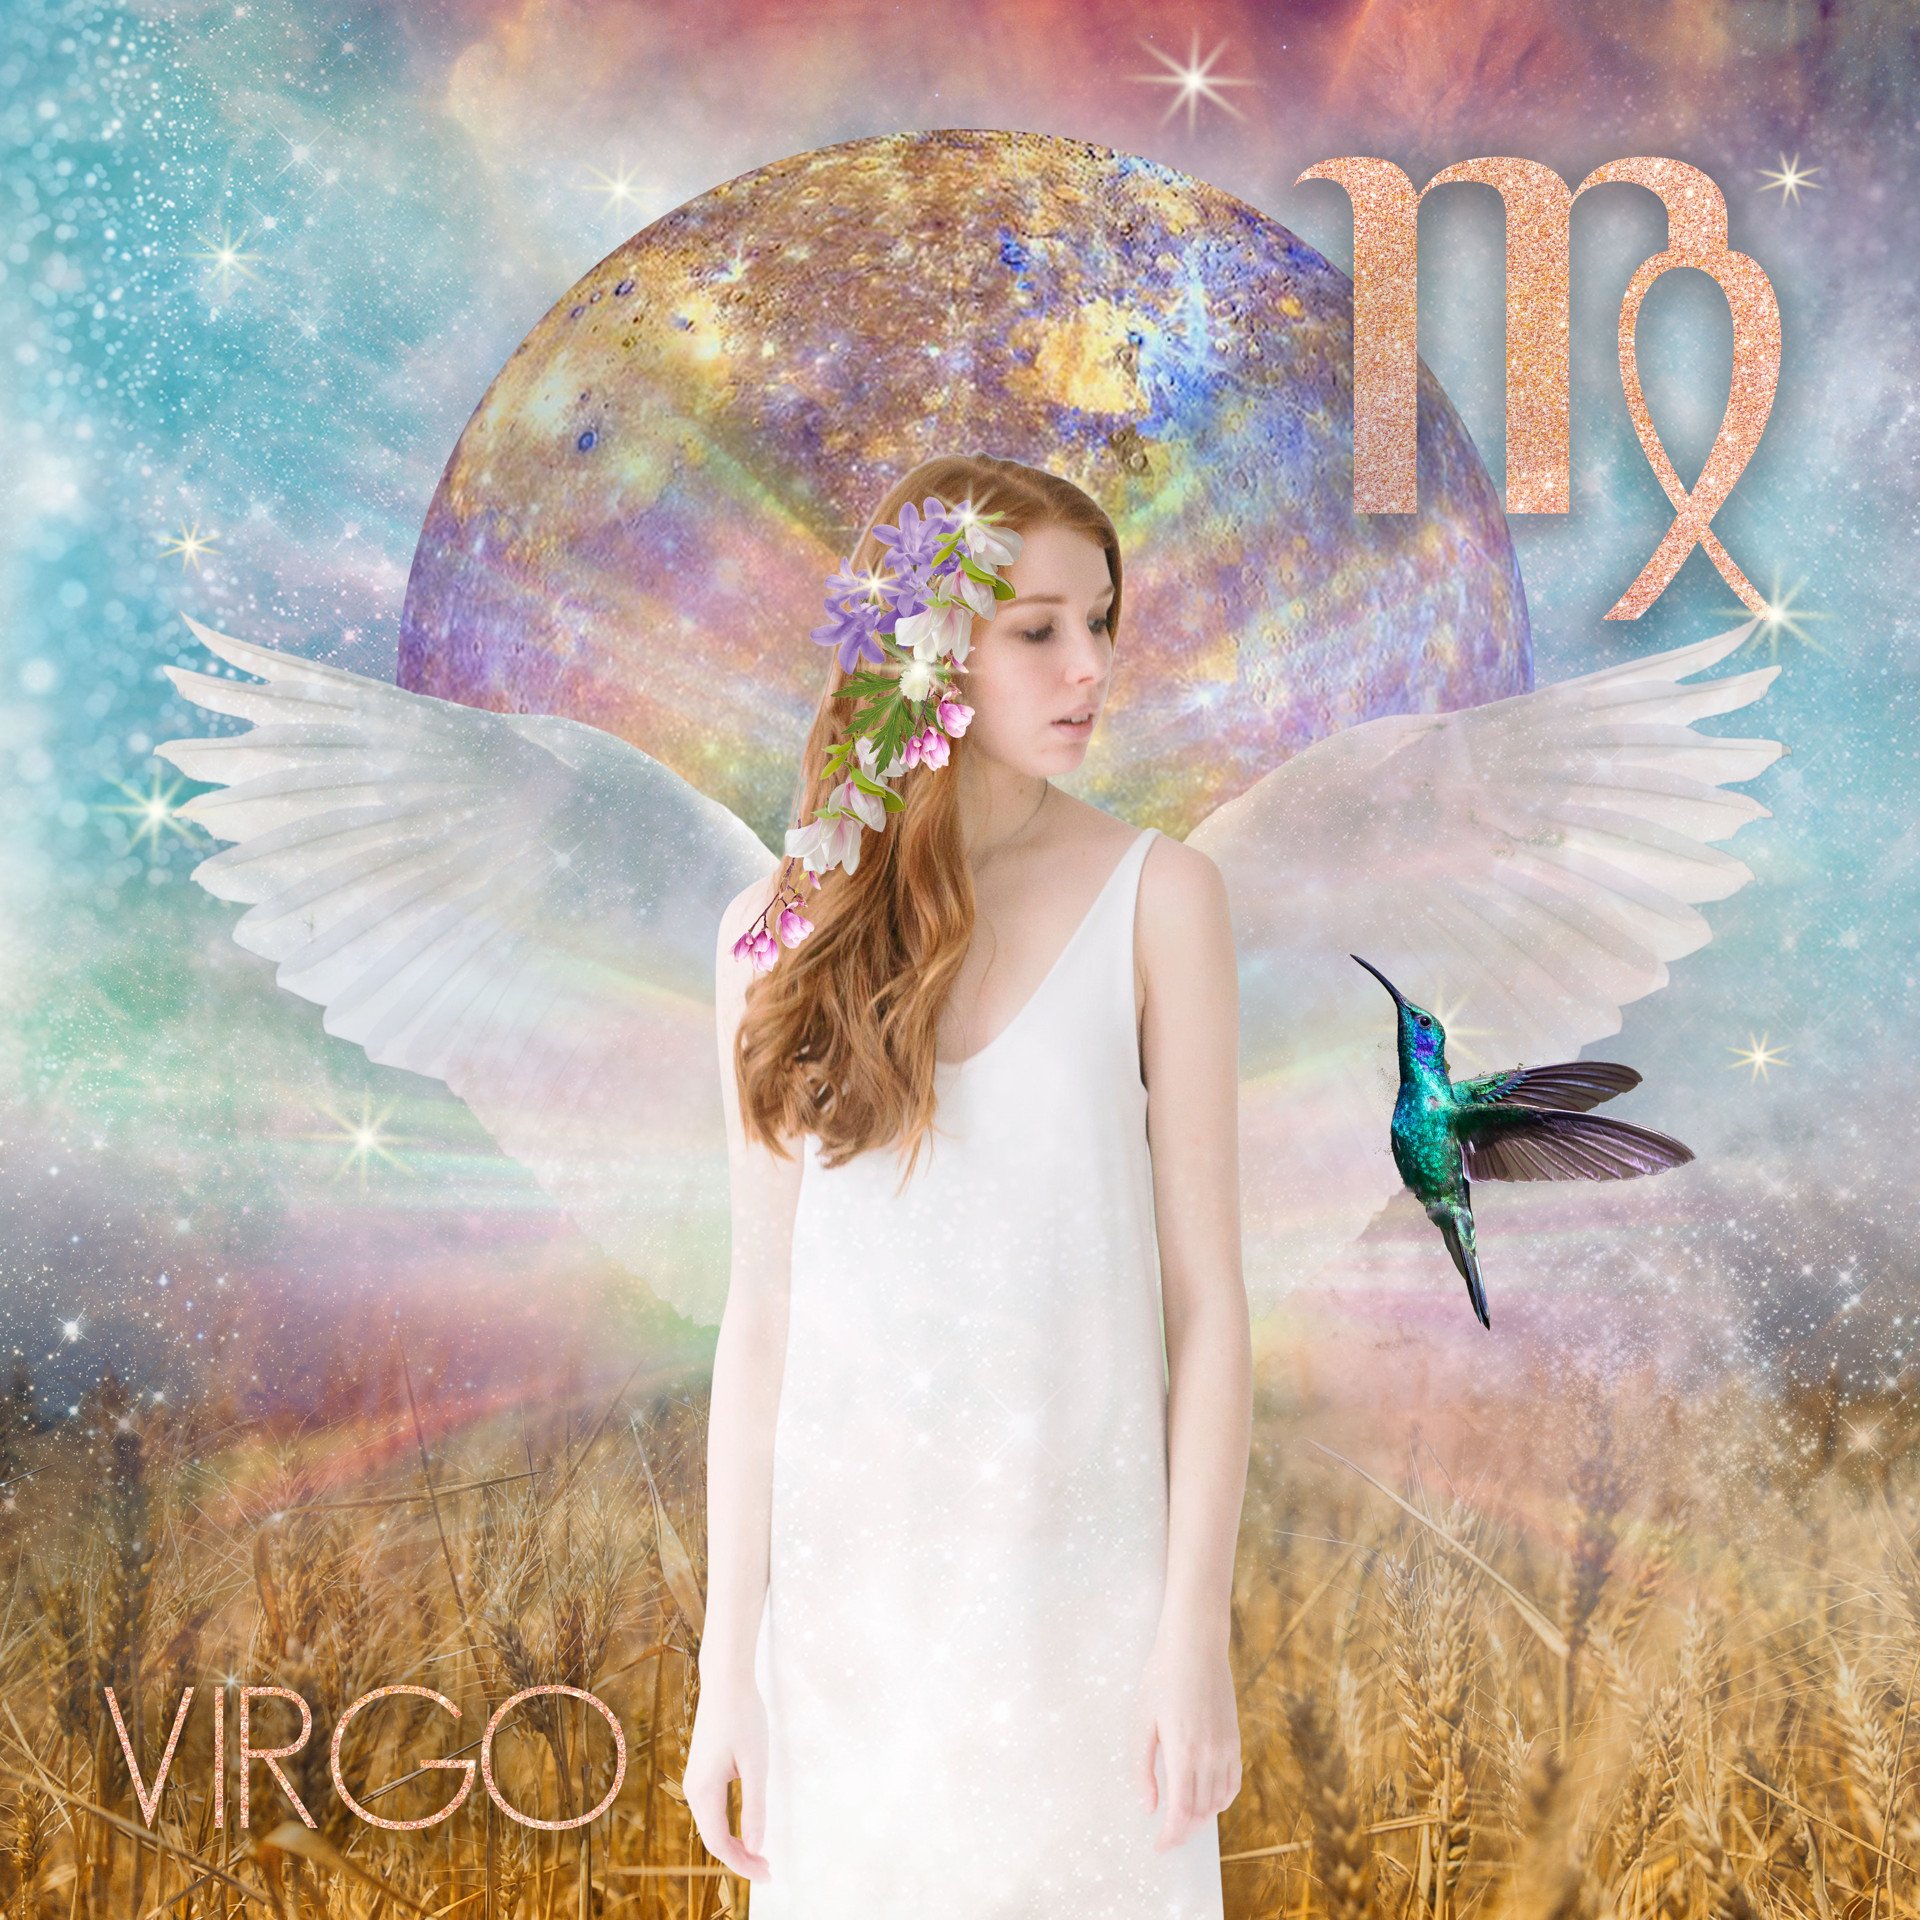 moon astrology today virgo